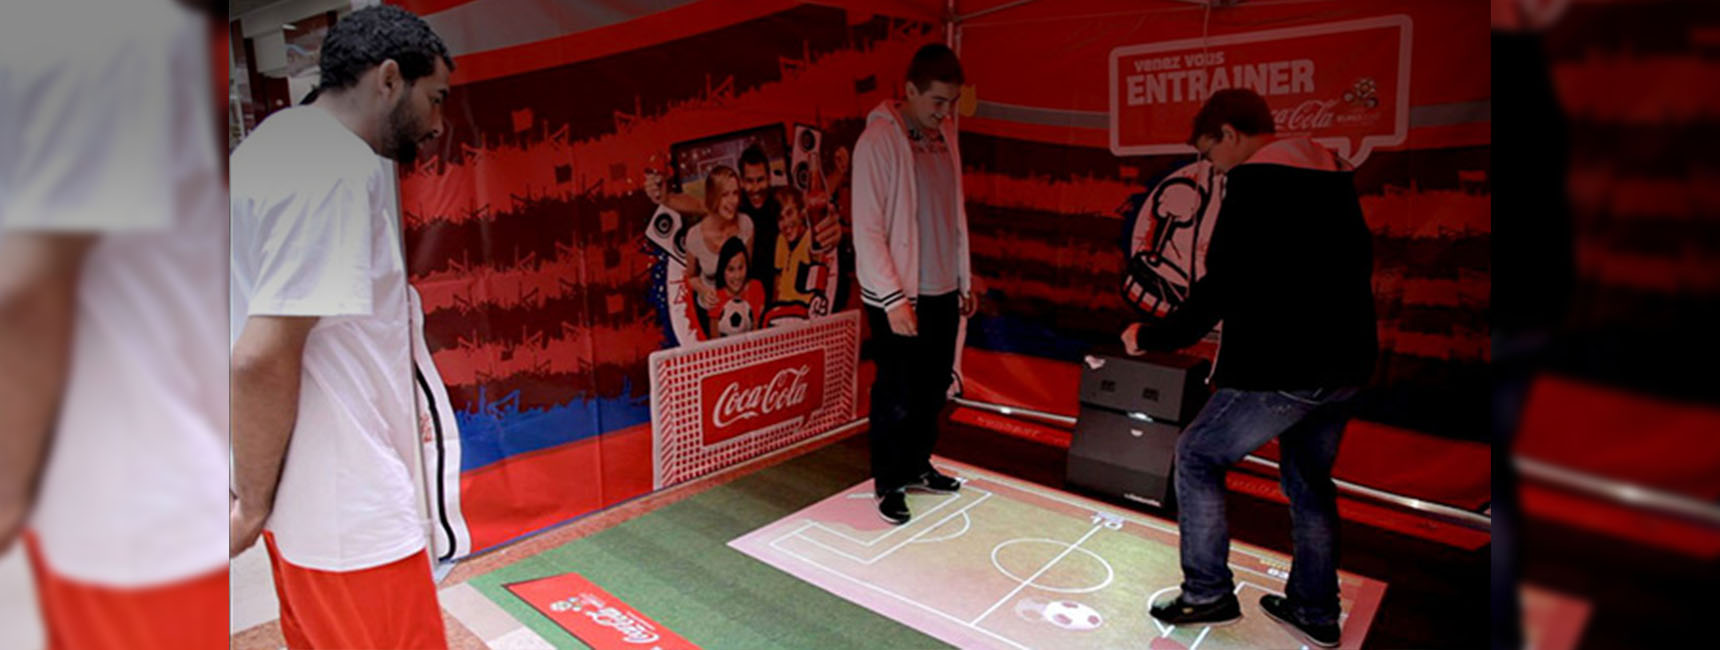 Match de foot sur sol interactif pour Coca-Cola - - Keemia Digital - Activation Digitale Factory